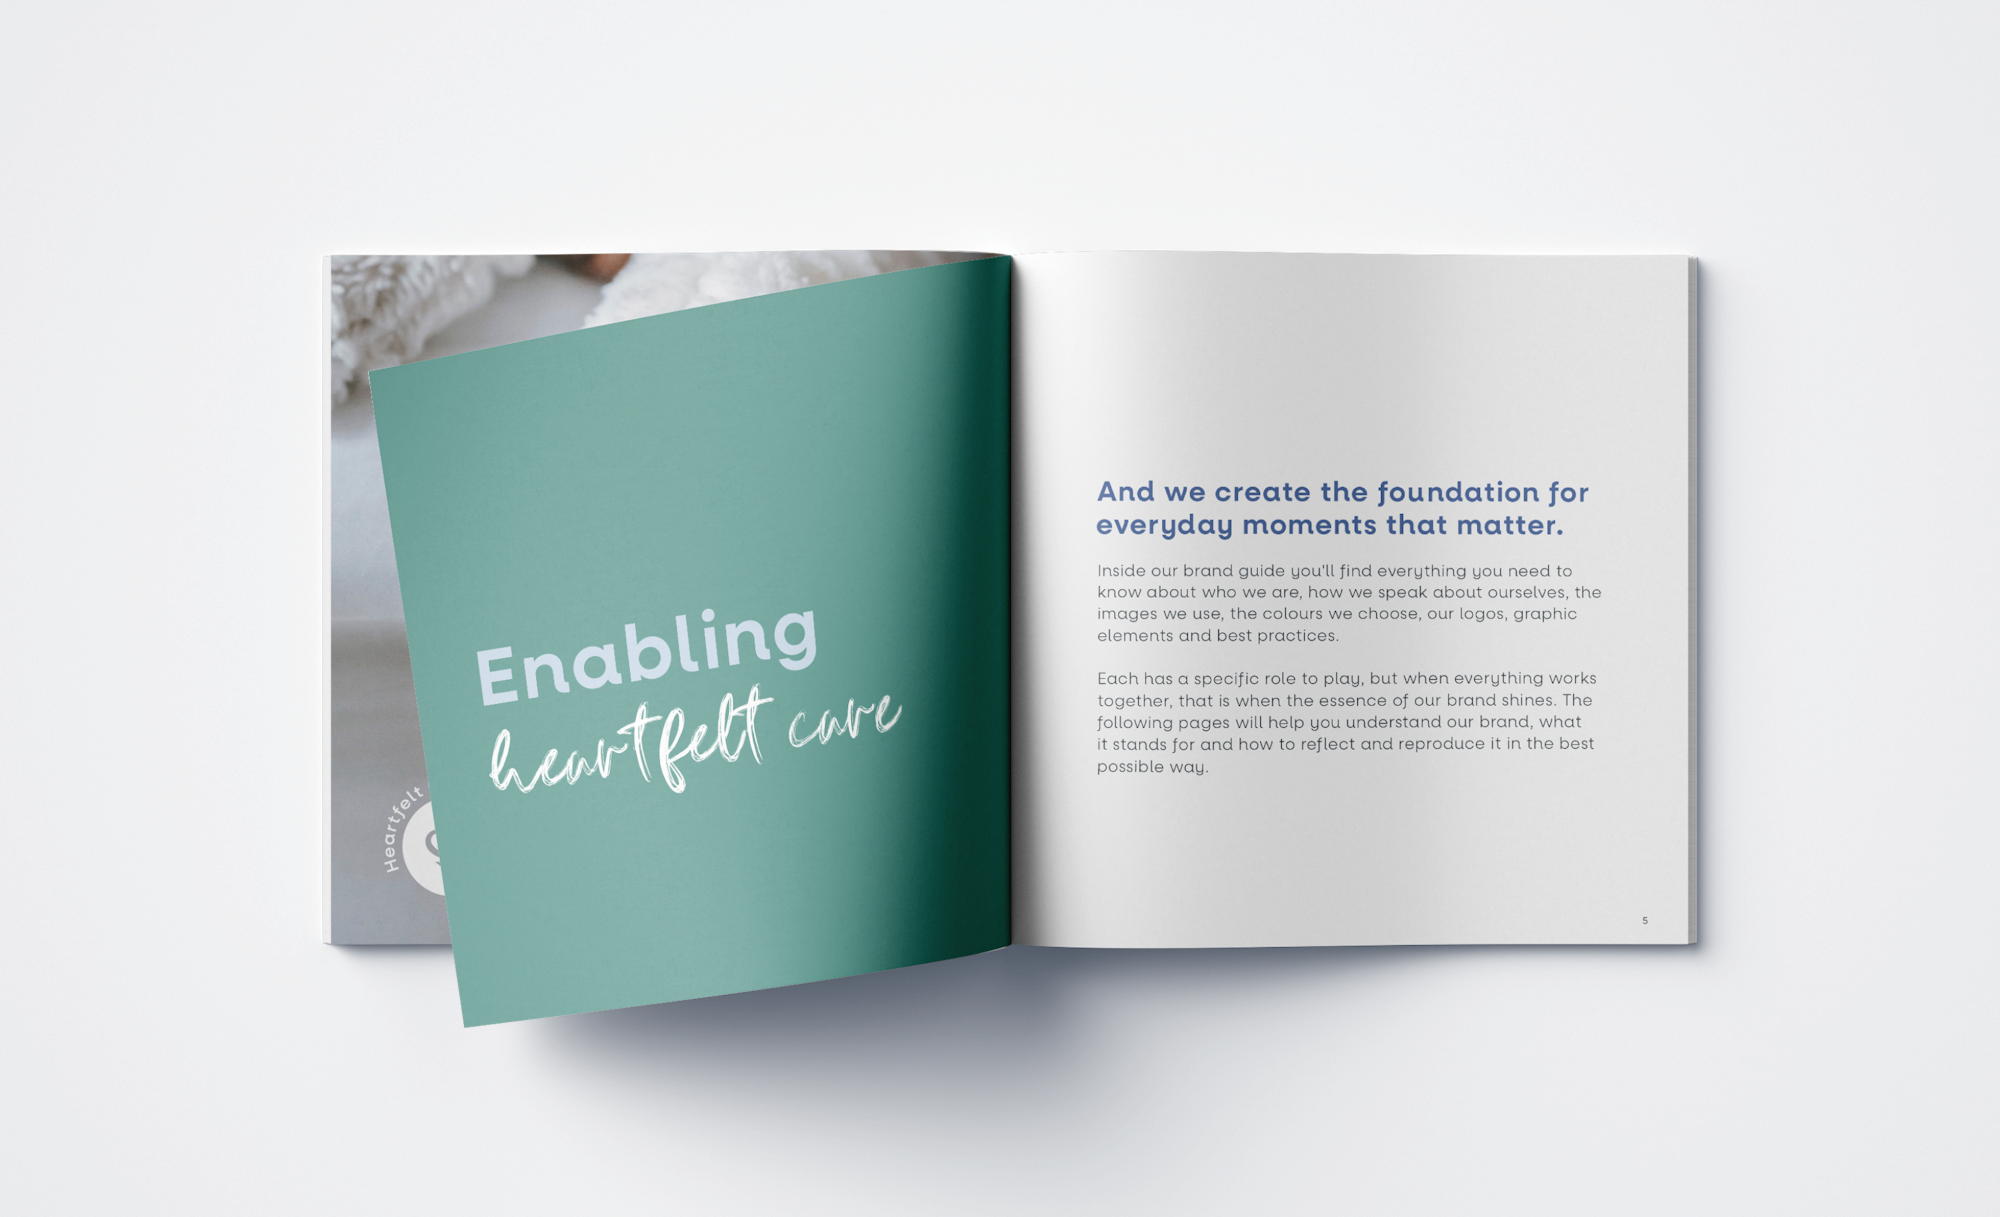 Open brand guide reading: Enabling heartfelt care.